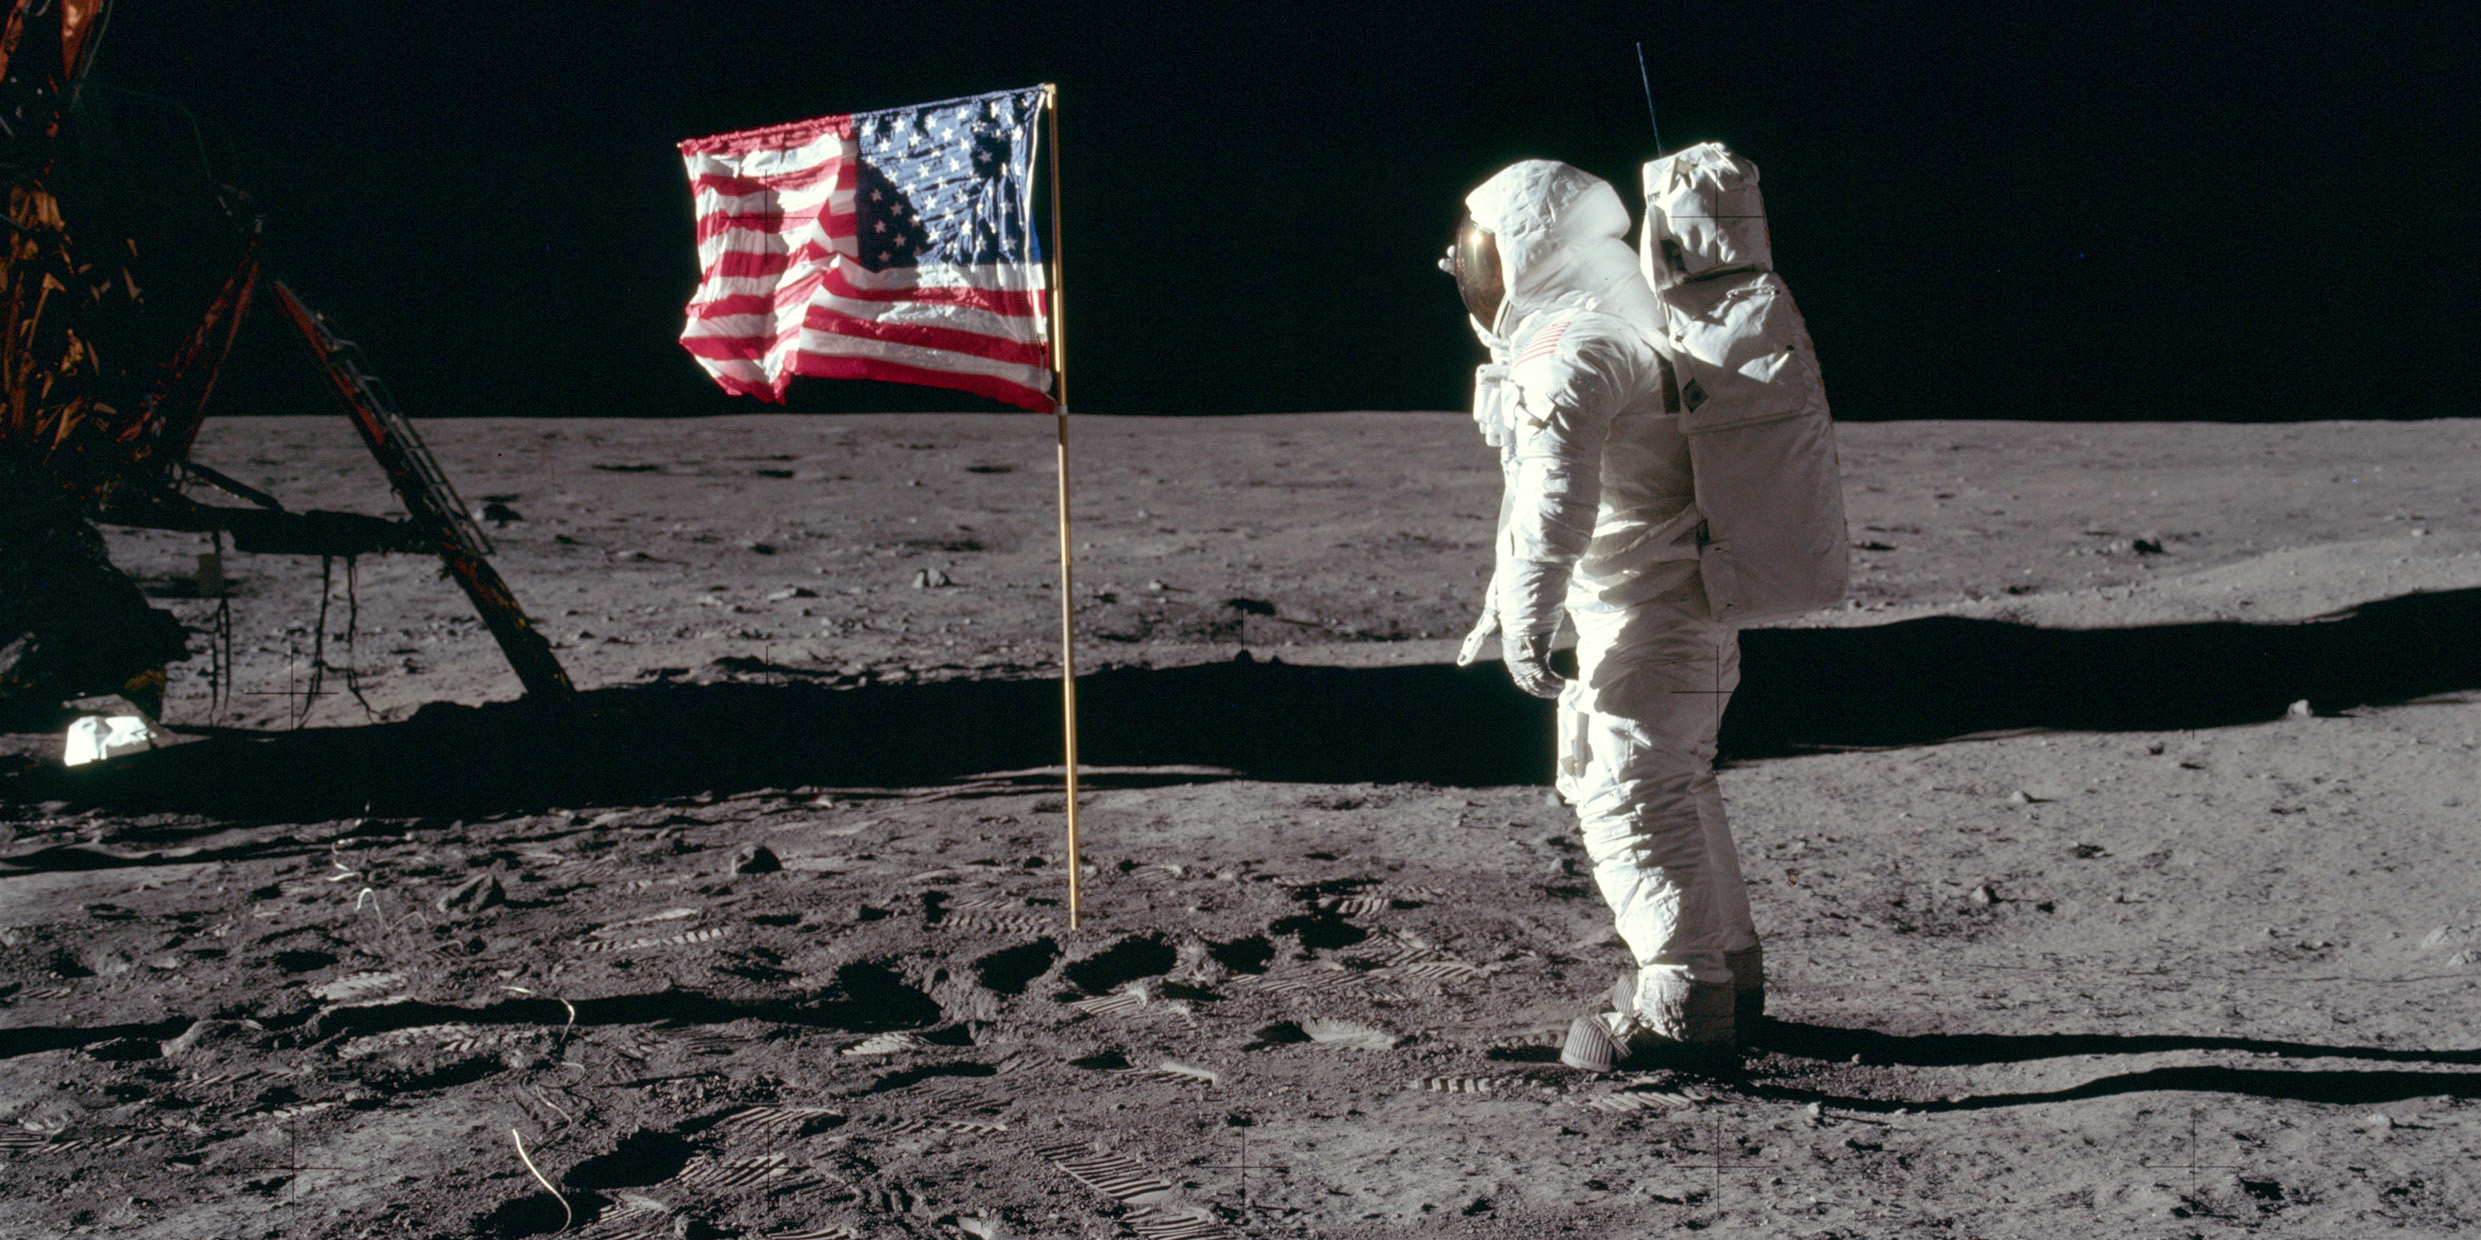 Image of Buzz Aldron on moon